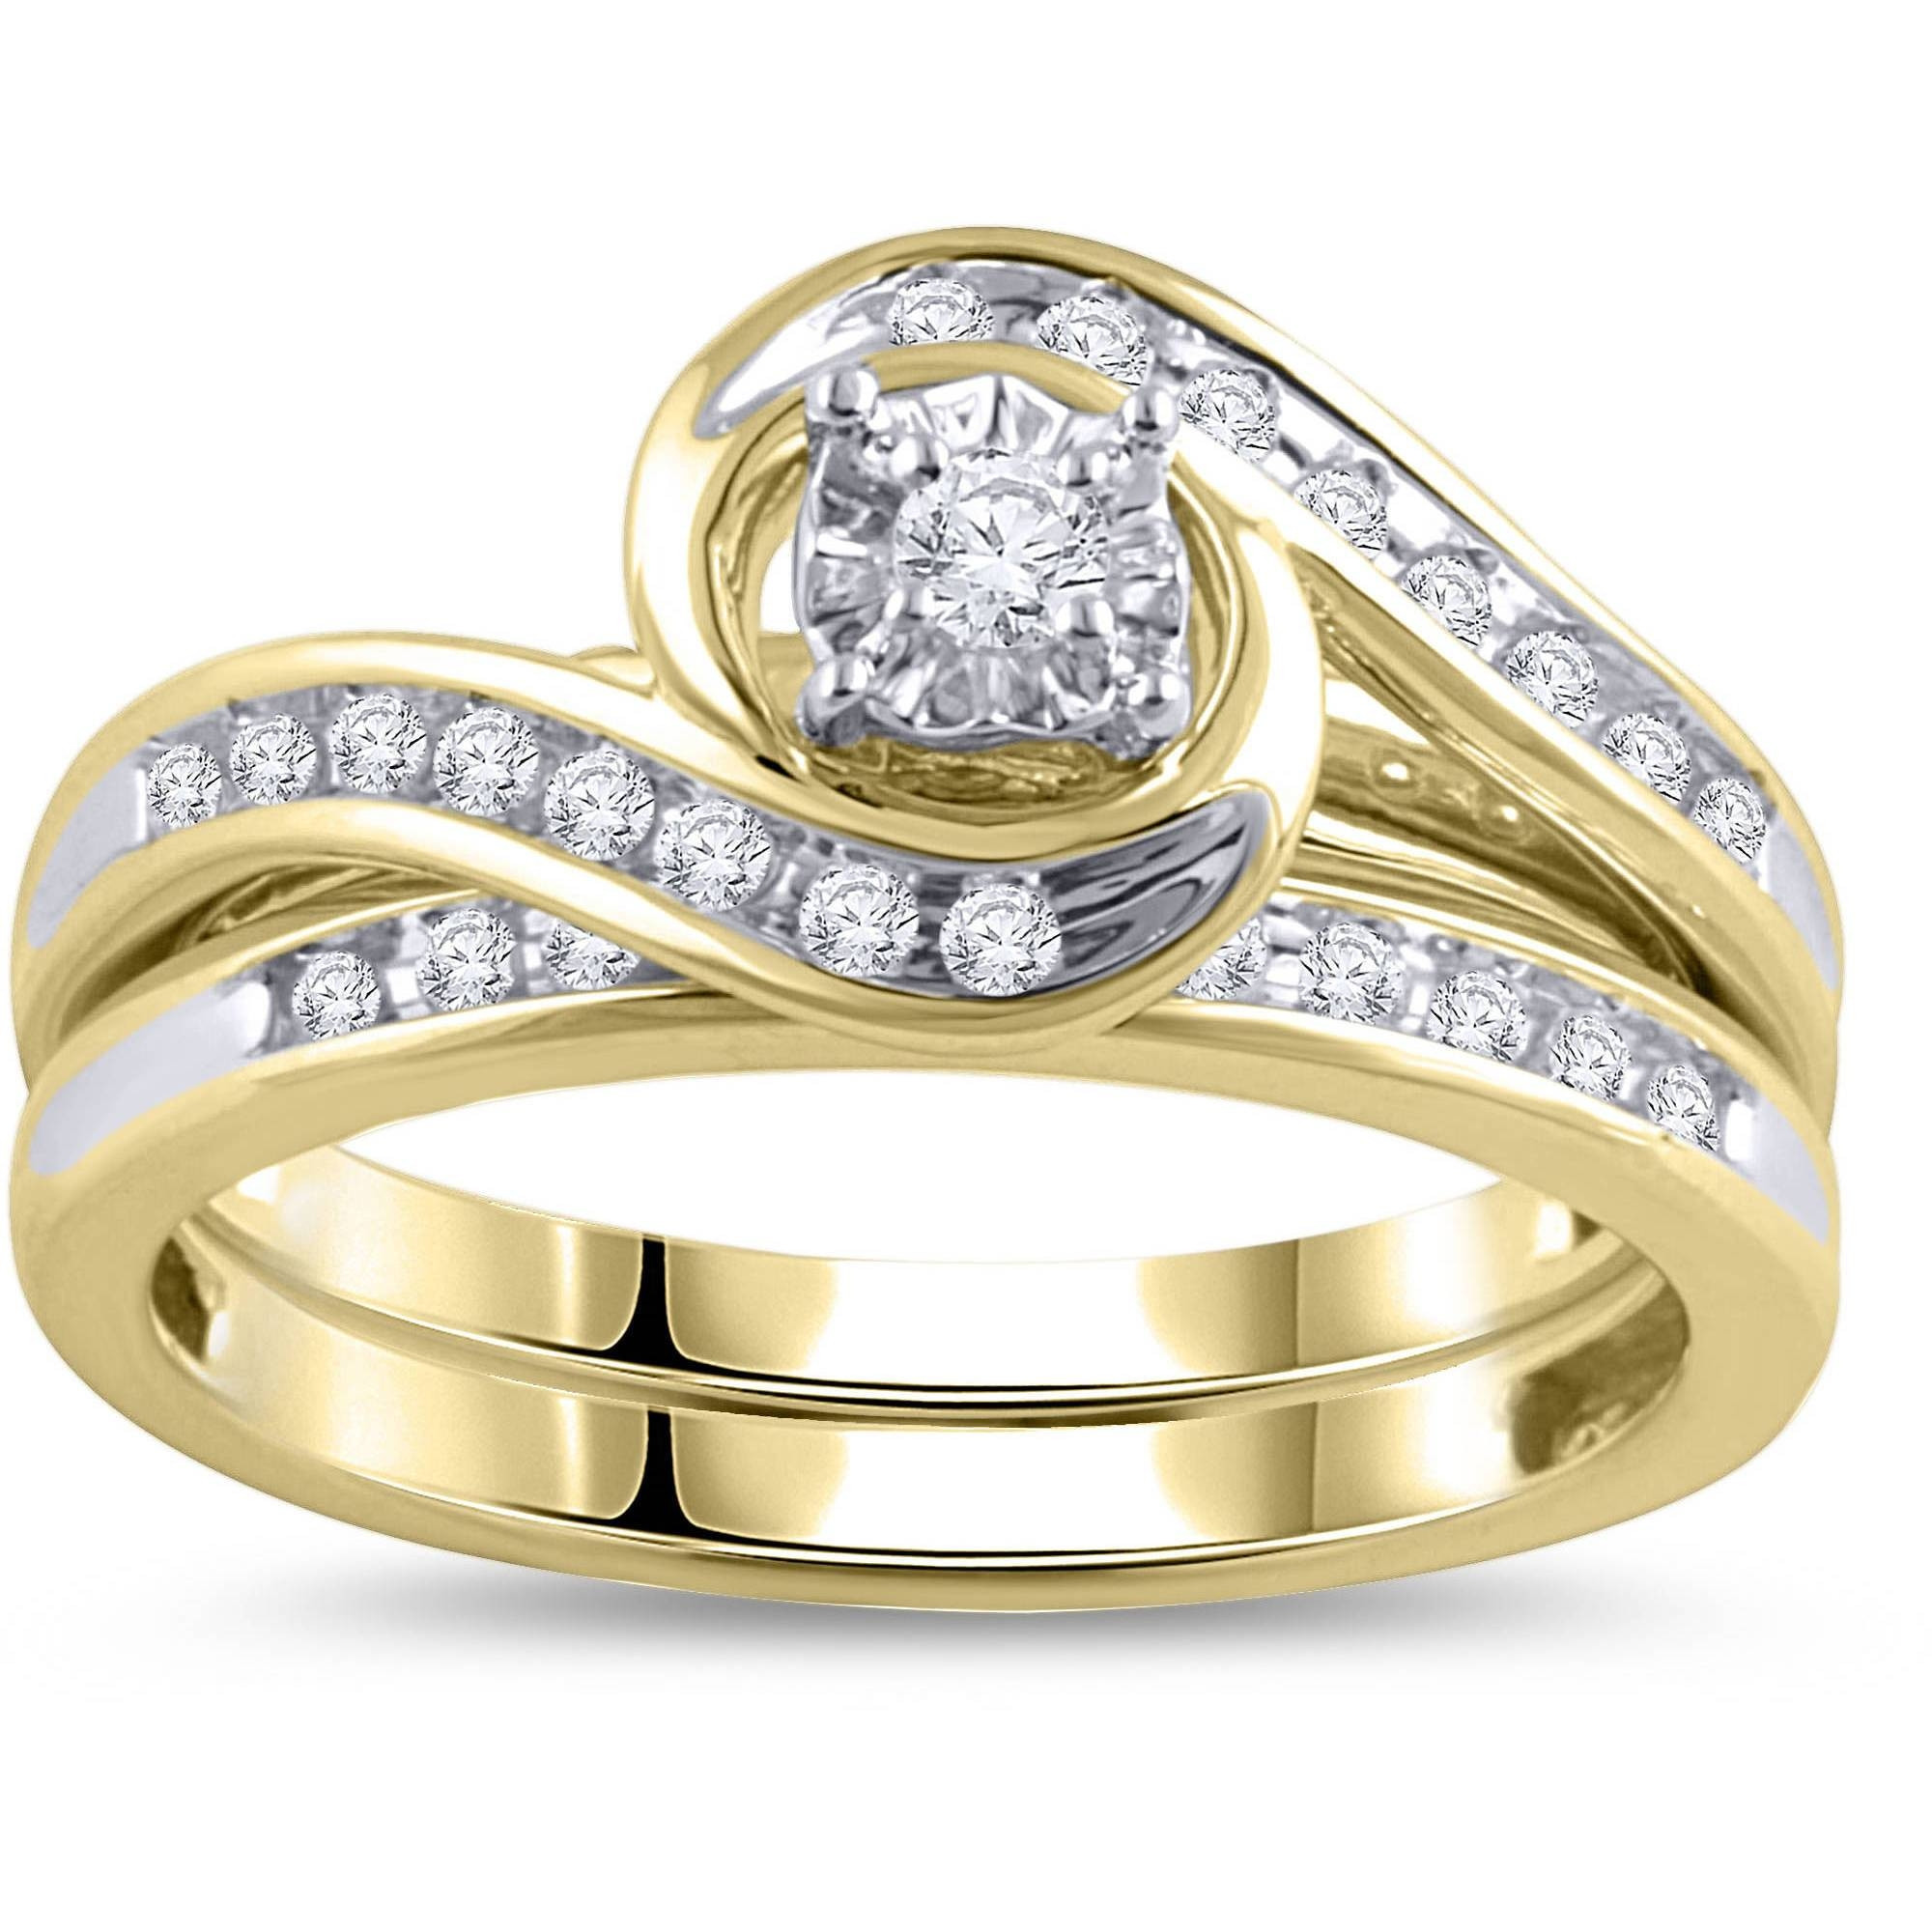 Walmart Wedding Ring Sets
 2019 Popular Wedding And Engagement Ring Sets